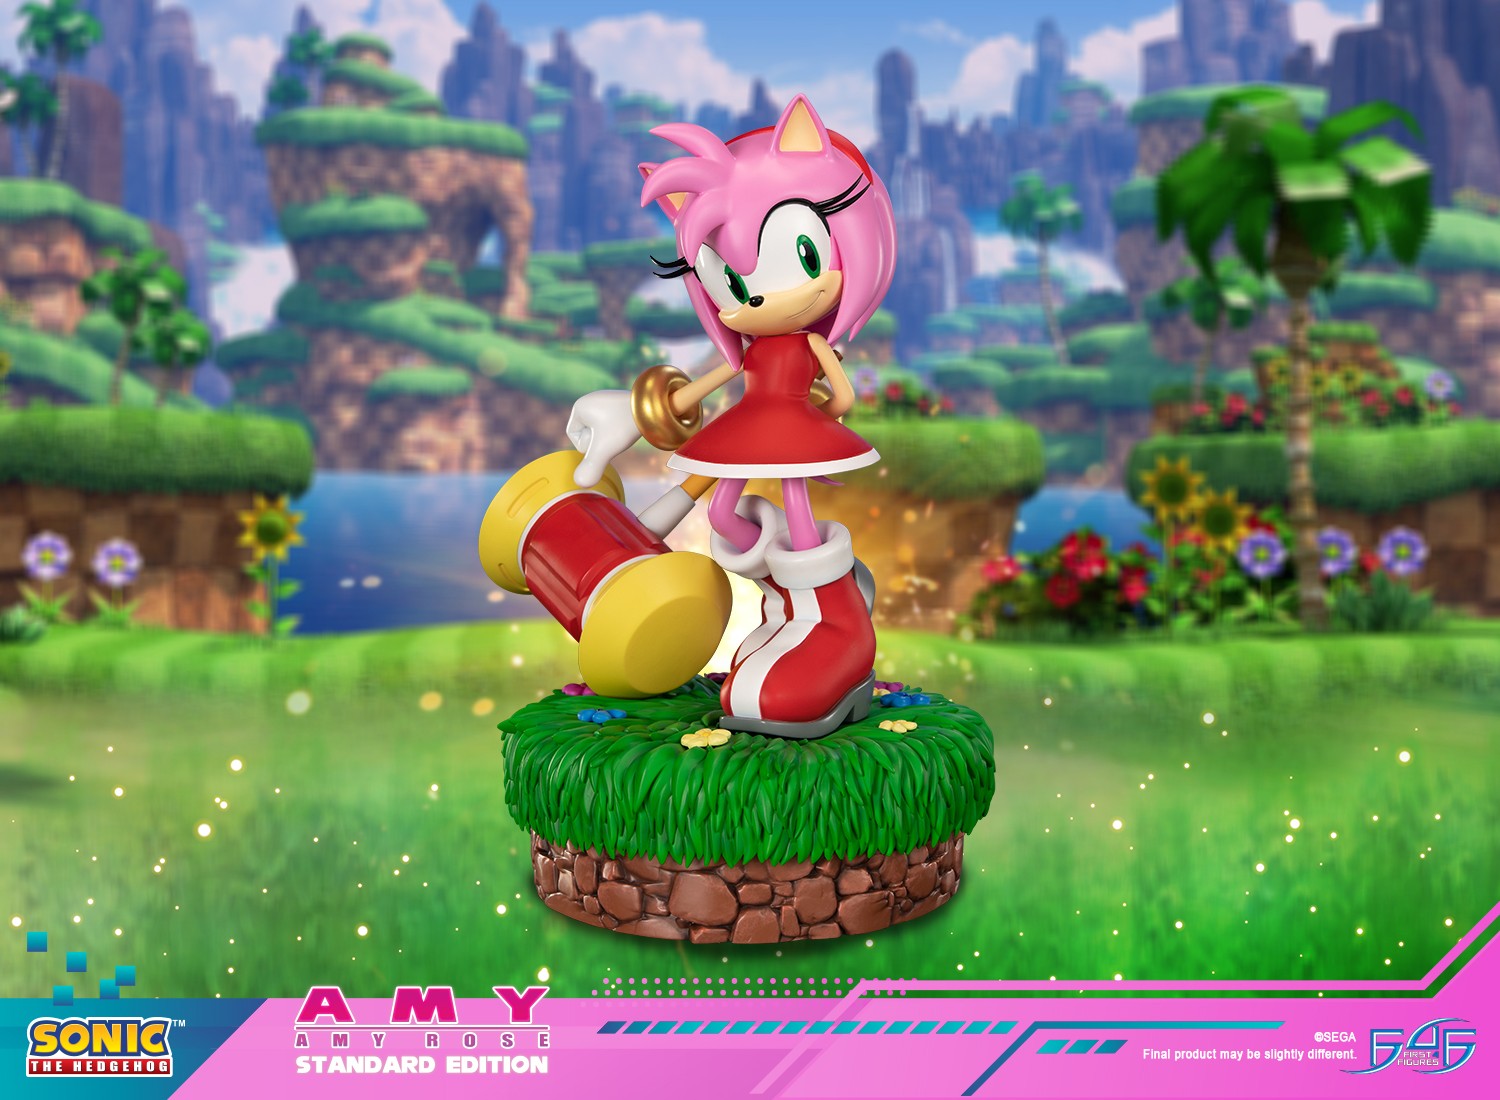 Sonic the Hedgehog - Amy Standard Edition